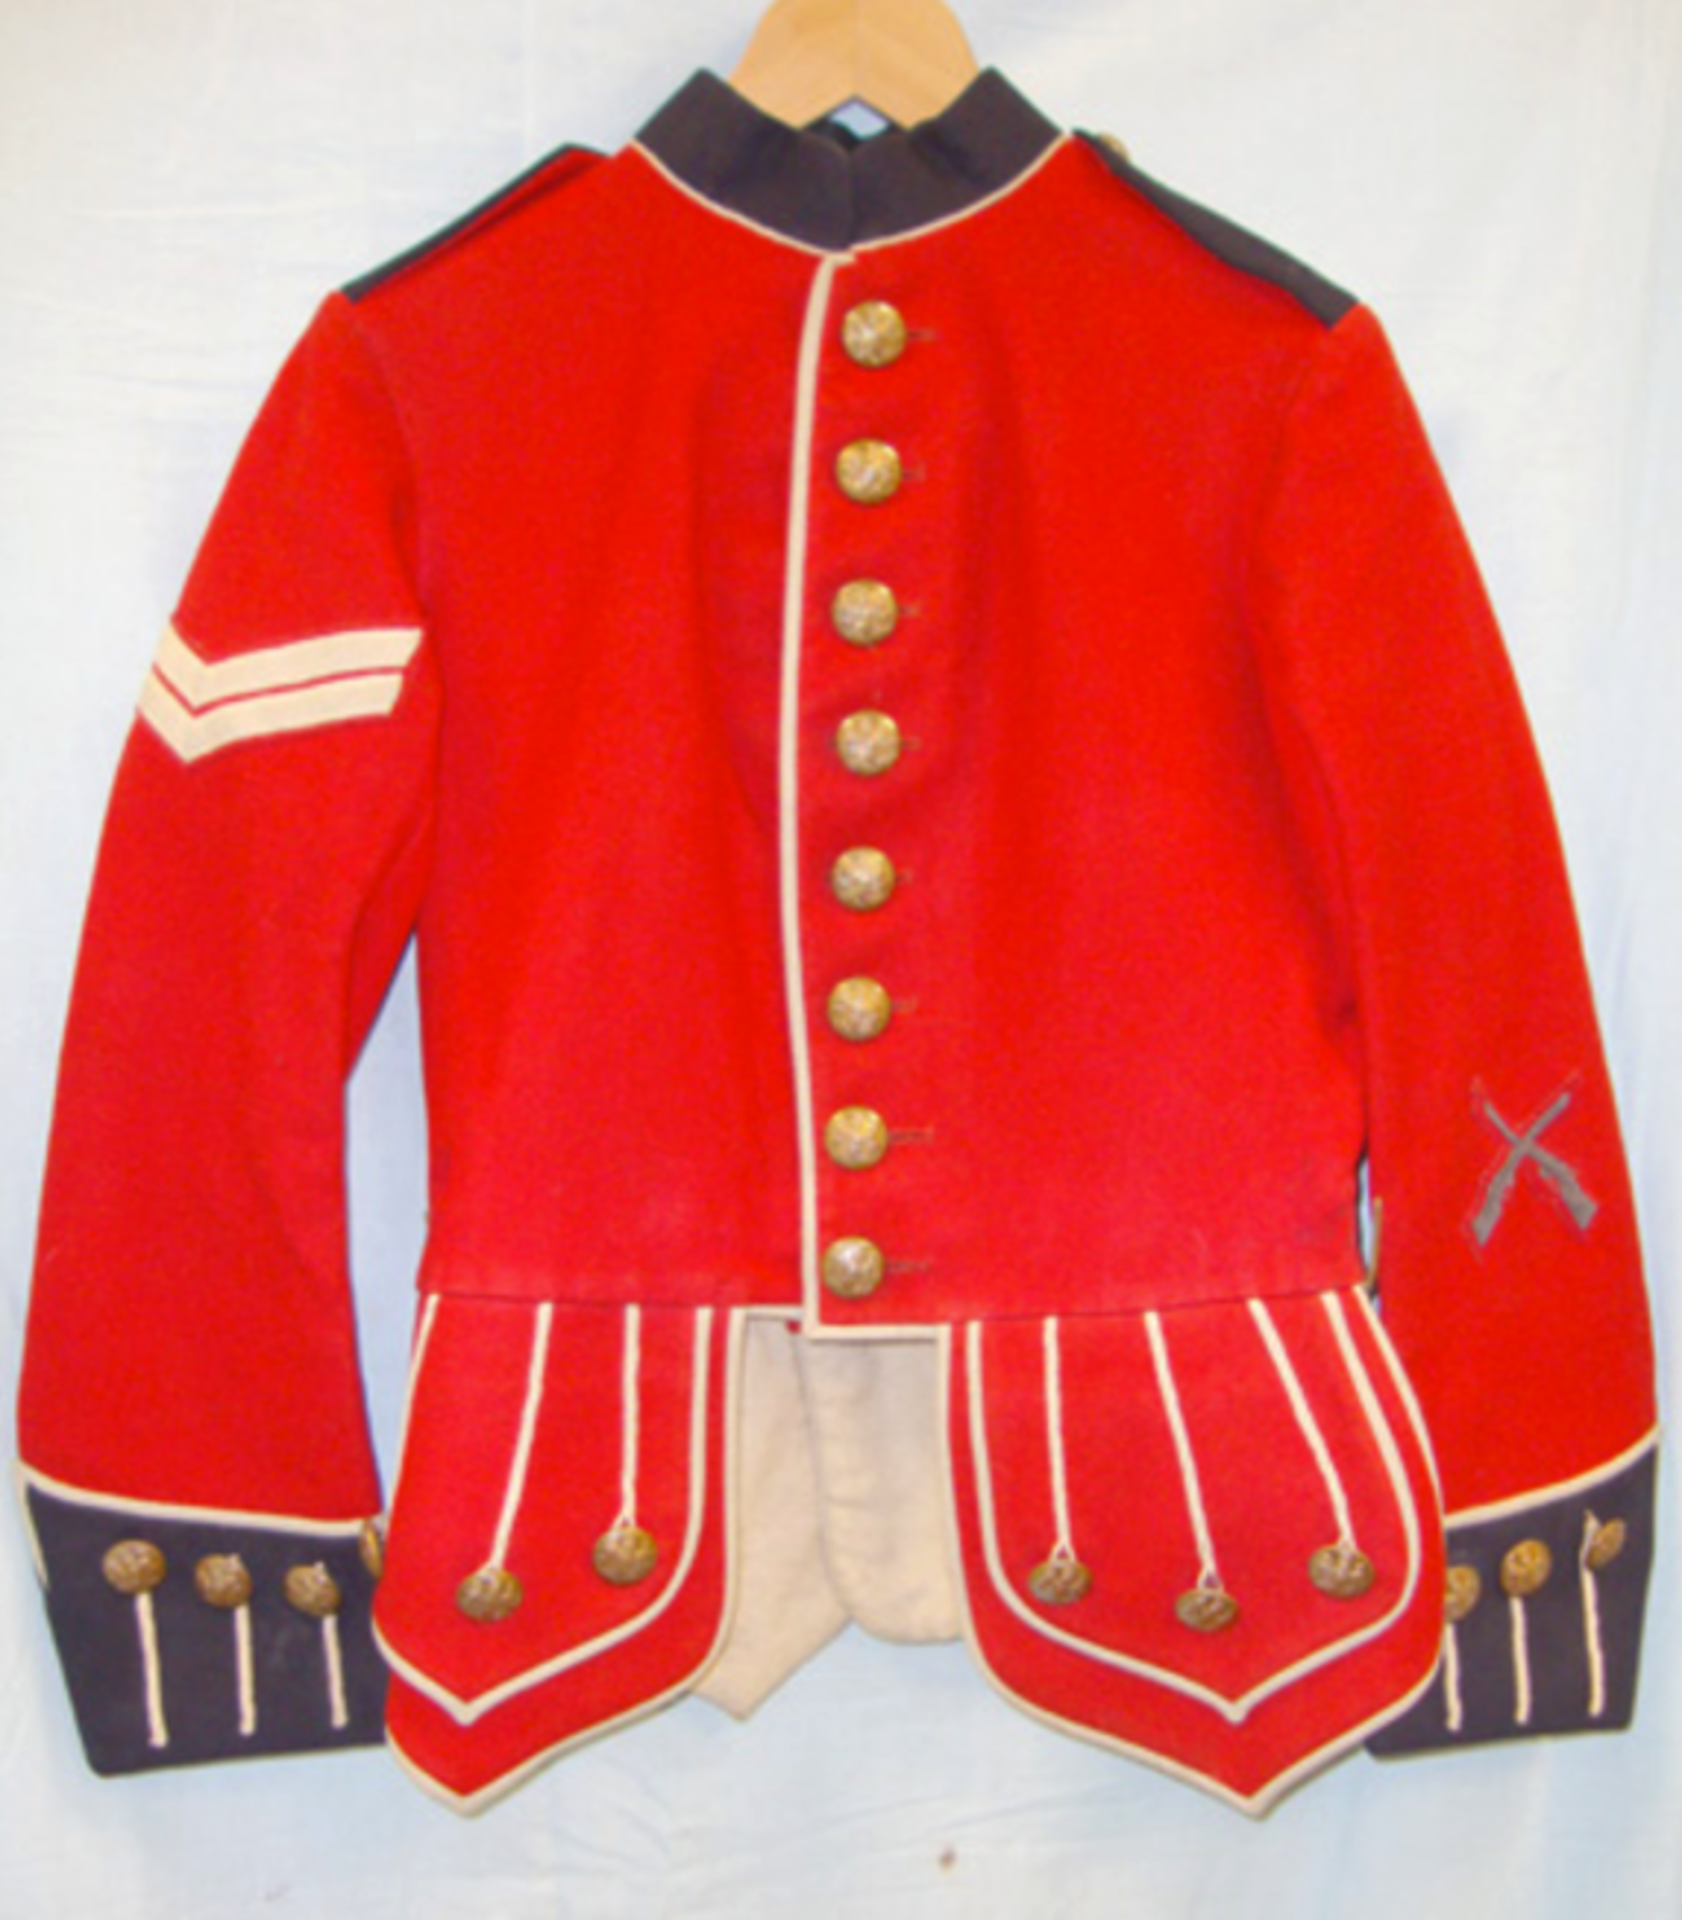 WW1 Period British Corporal's, Scarlet Doublet Front Tunic.   This is a splendid, original WW1 era